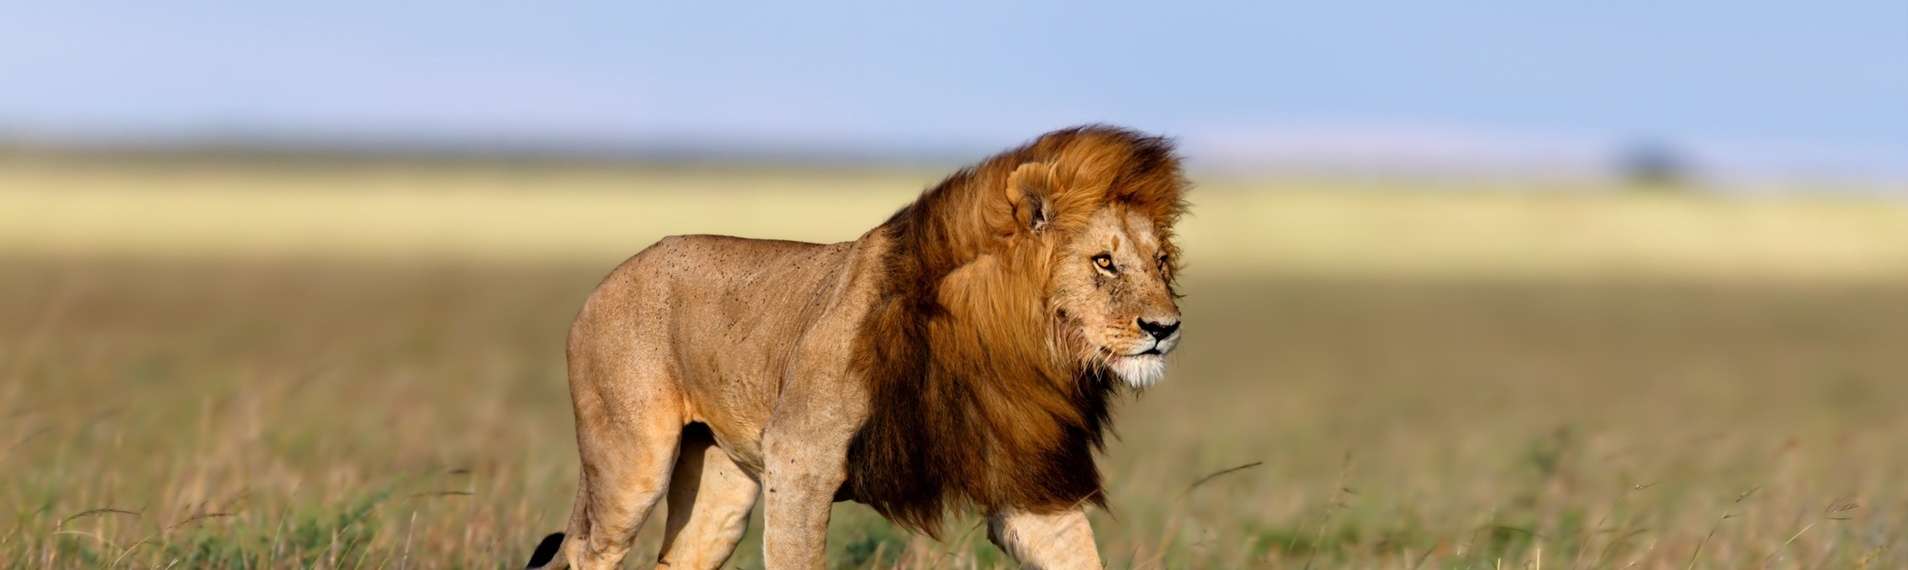 Optimal Bror Fugtig Lion Facts | Southern Africa Wildlife Guide